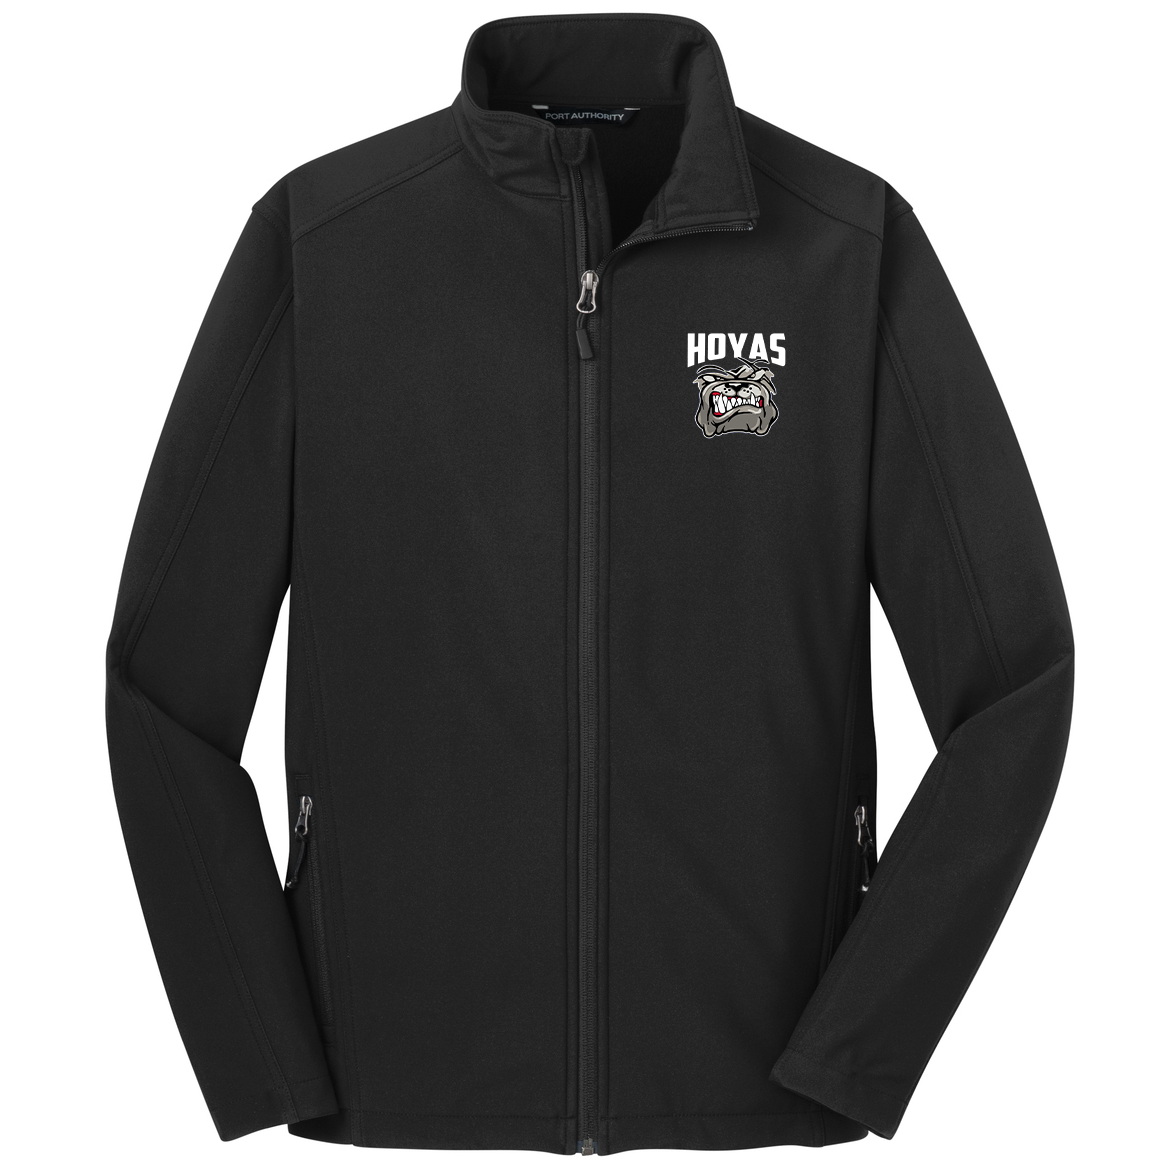 Hoya Lacrosse Soft Shell Jacket